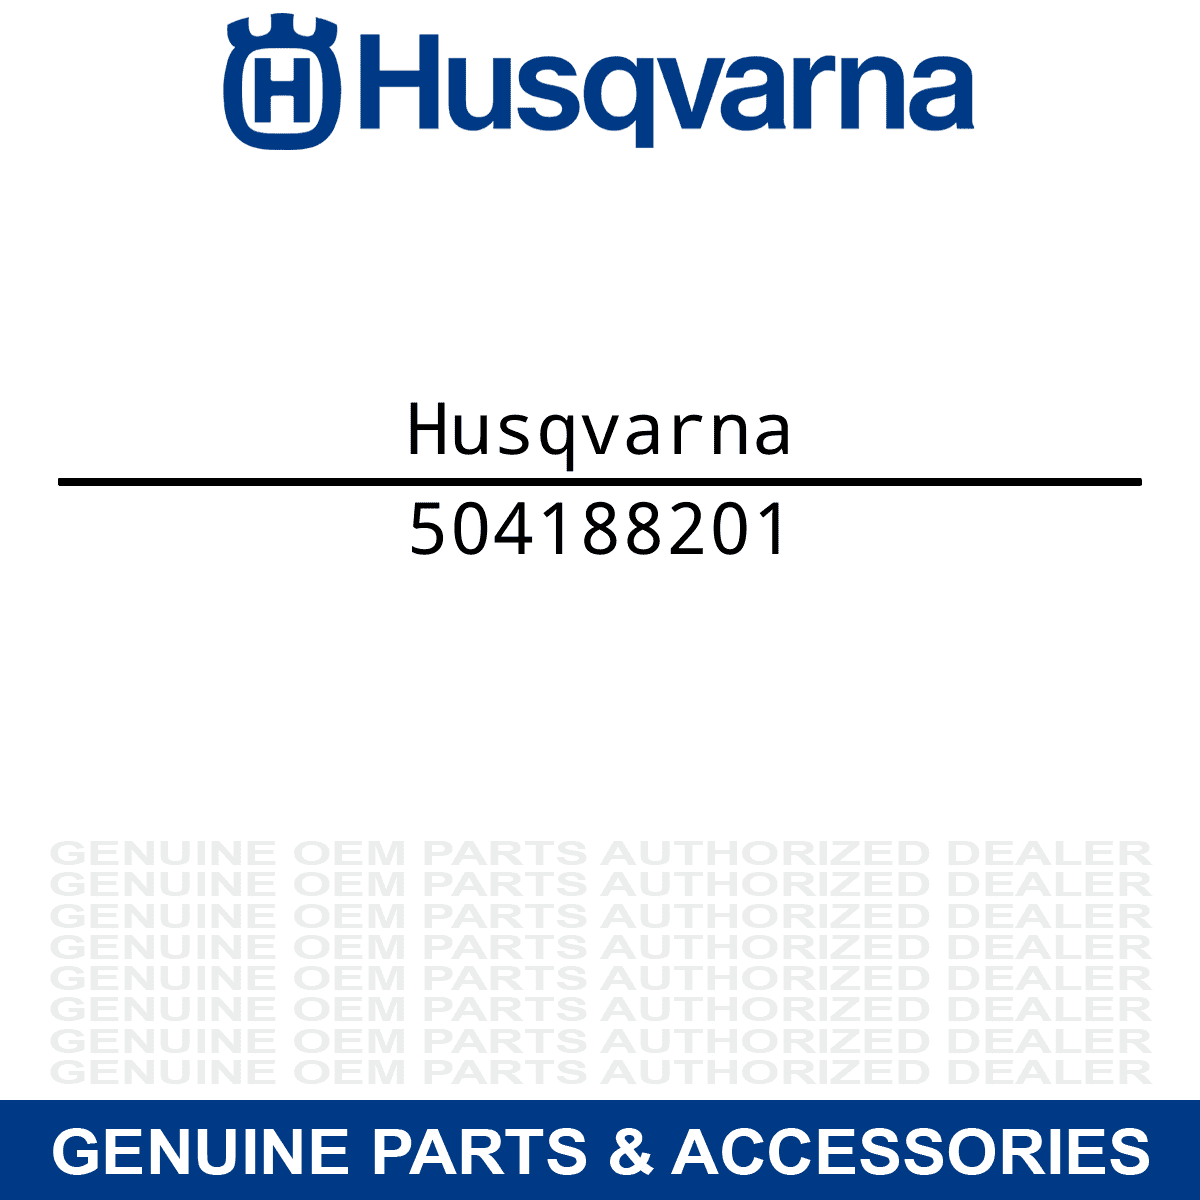 Genuine AYP SEARS HUSQVARNA AMMETER Part# 532122822 